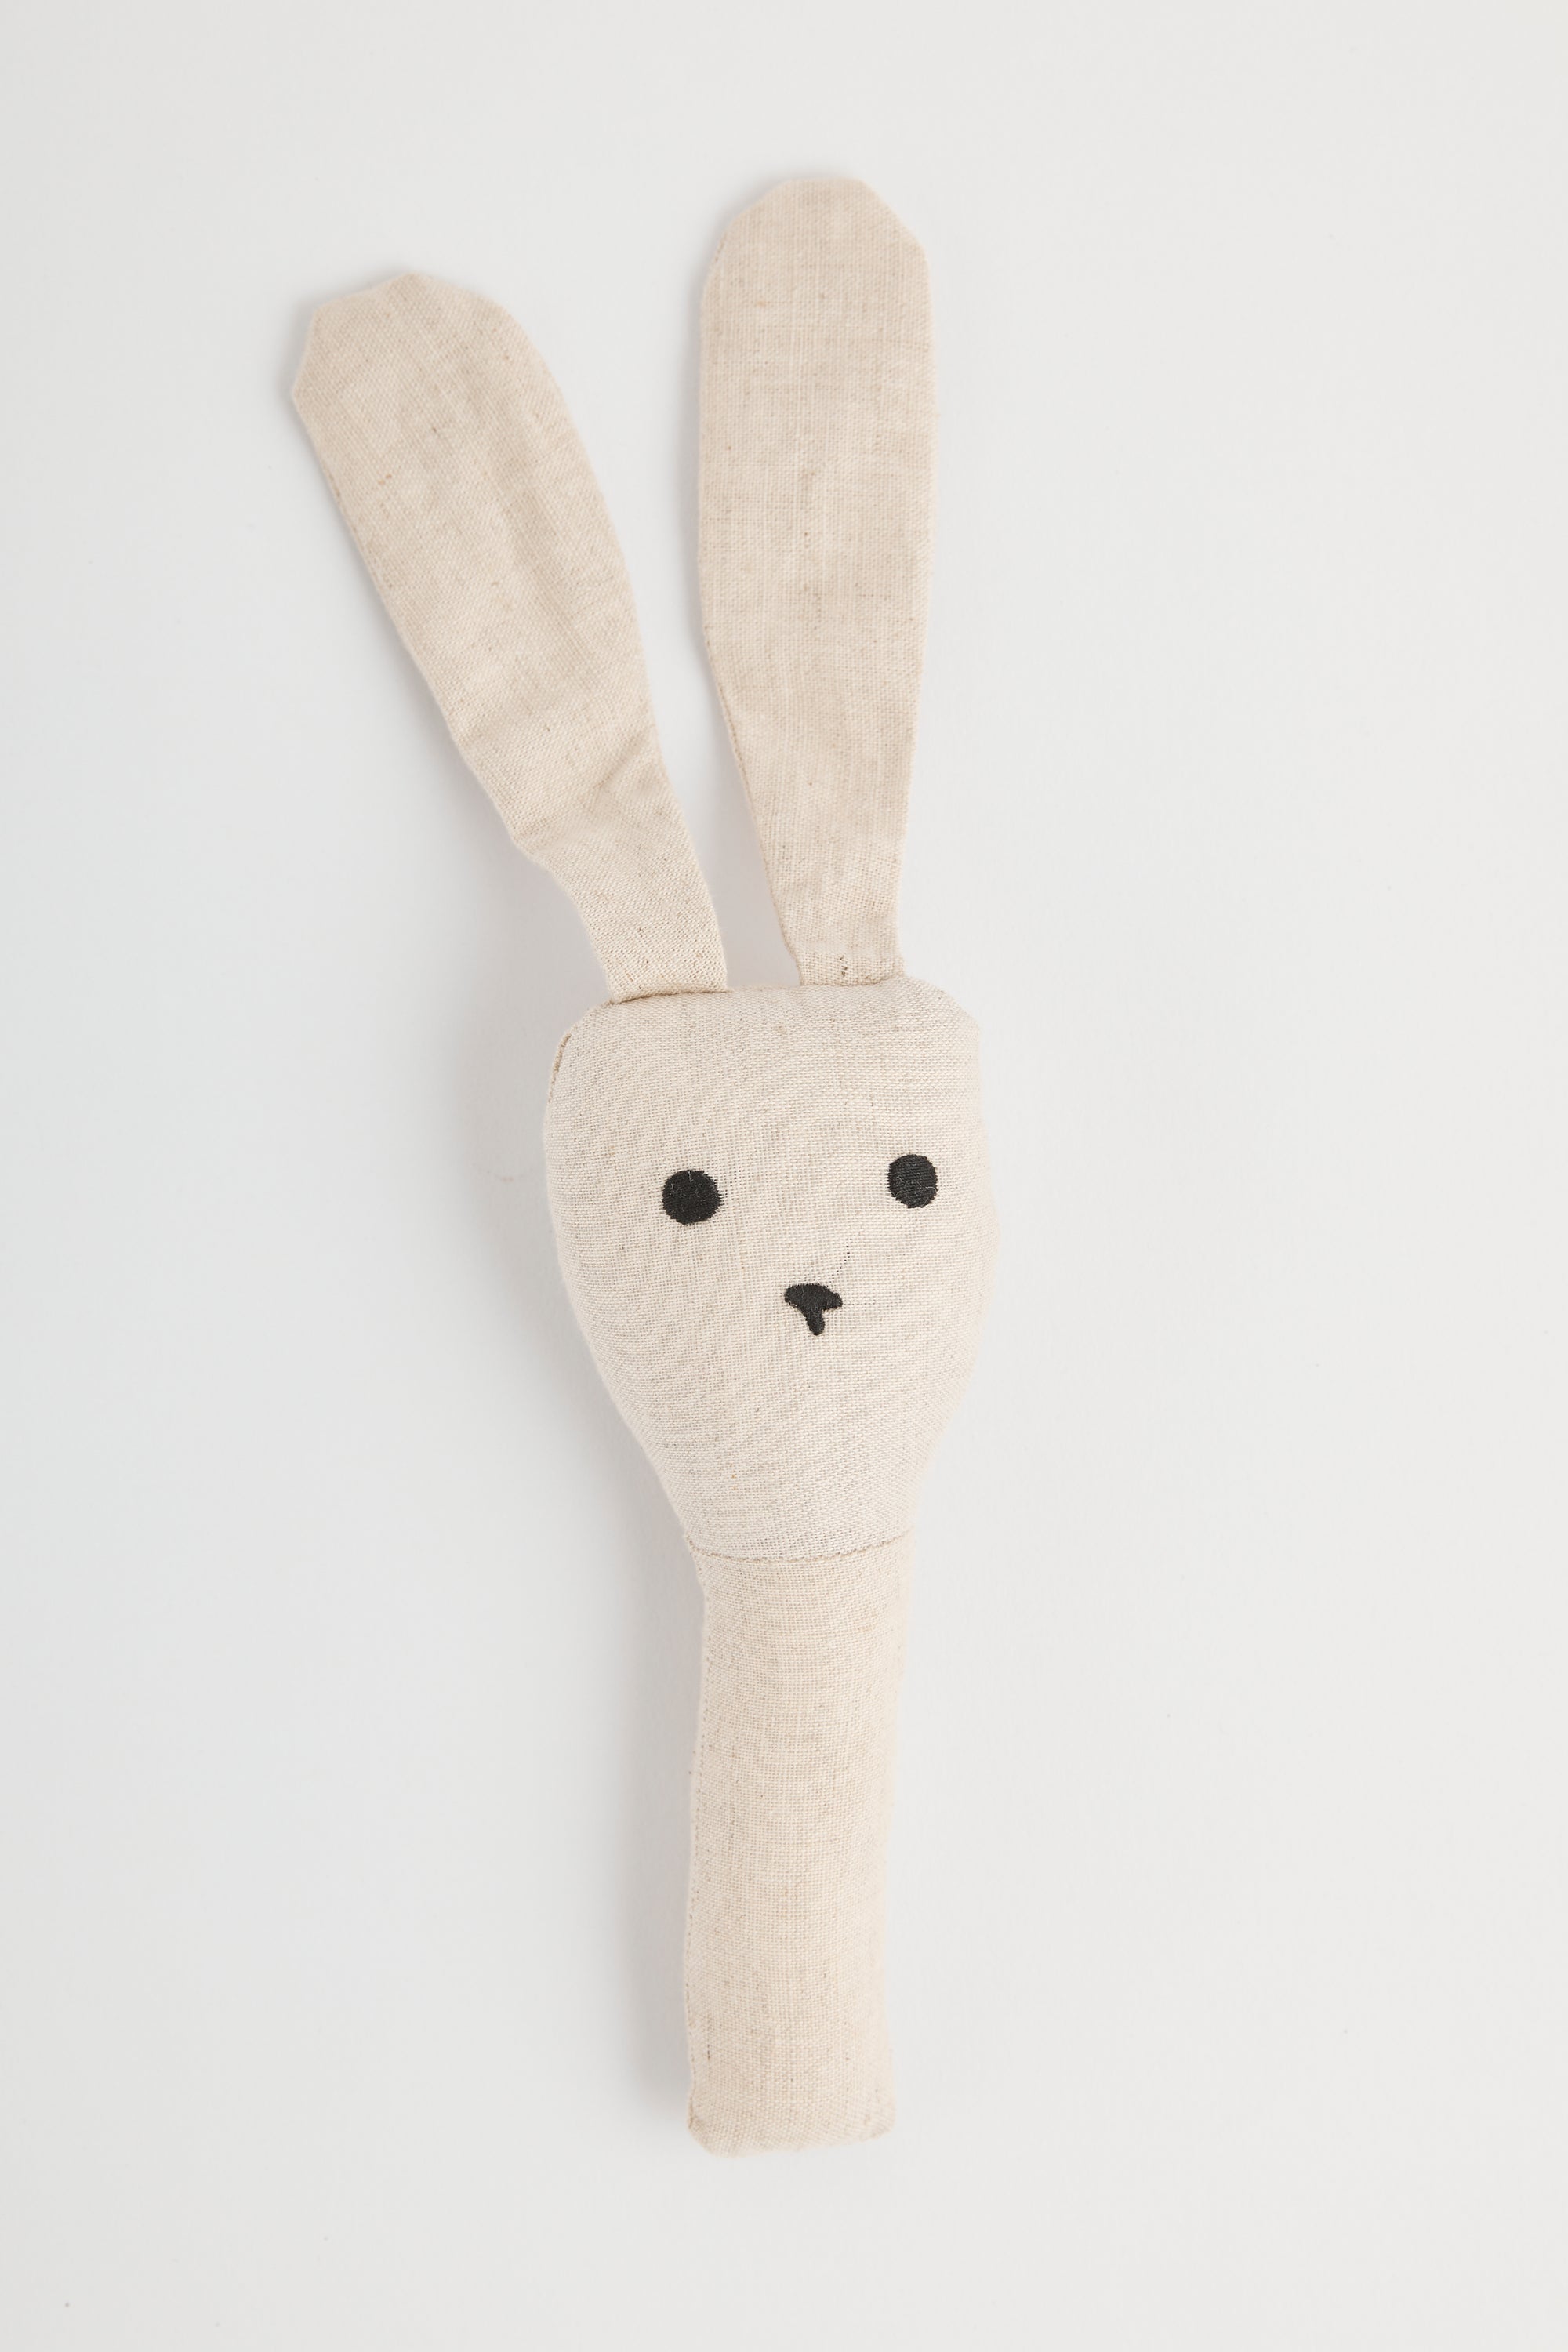 Linen Bunny Rattle - Flax